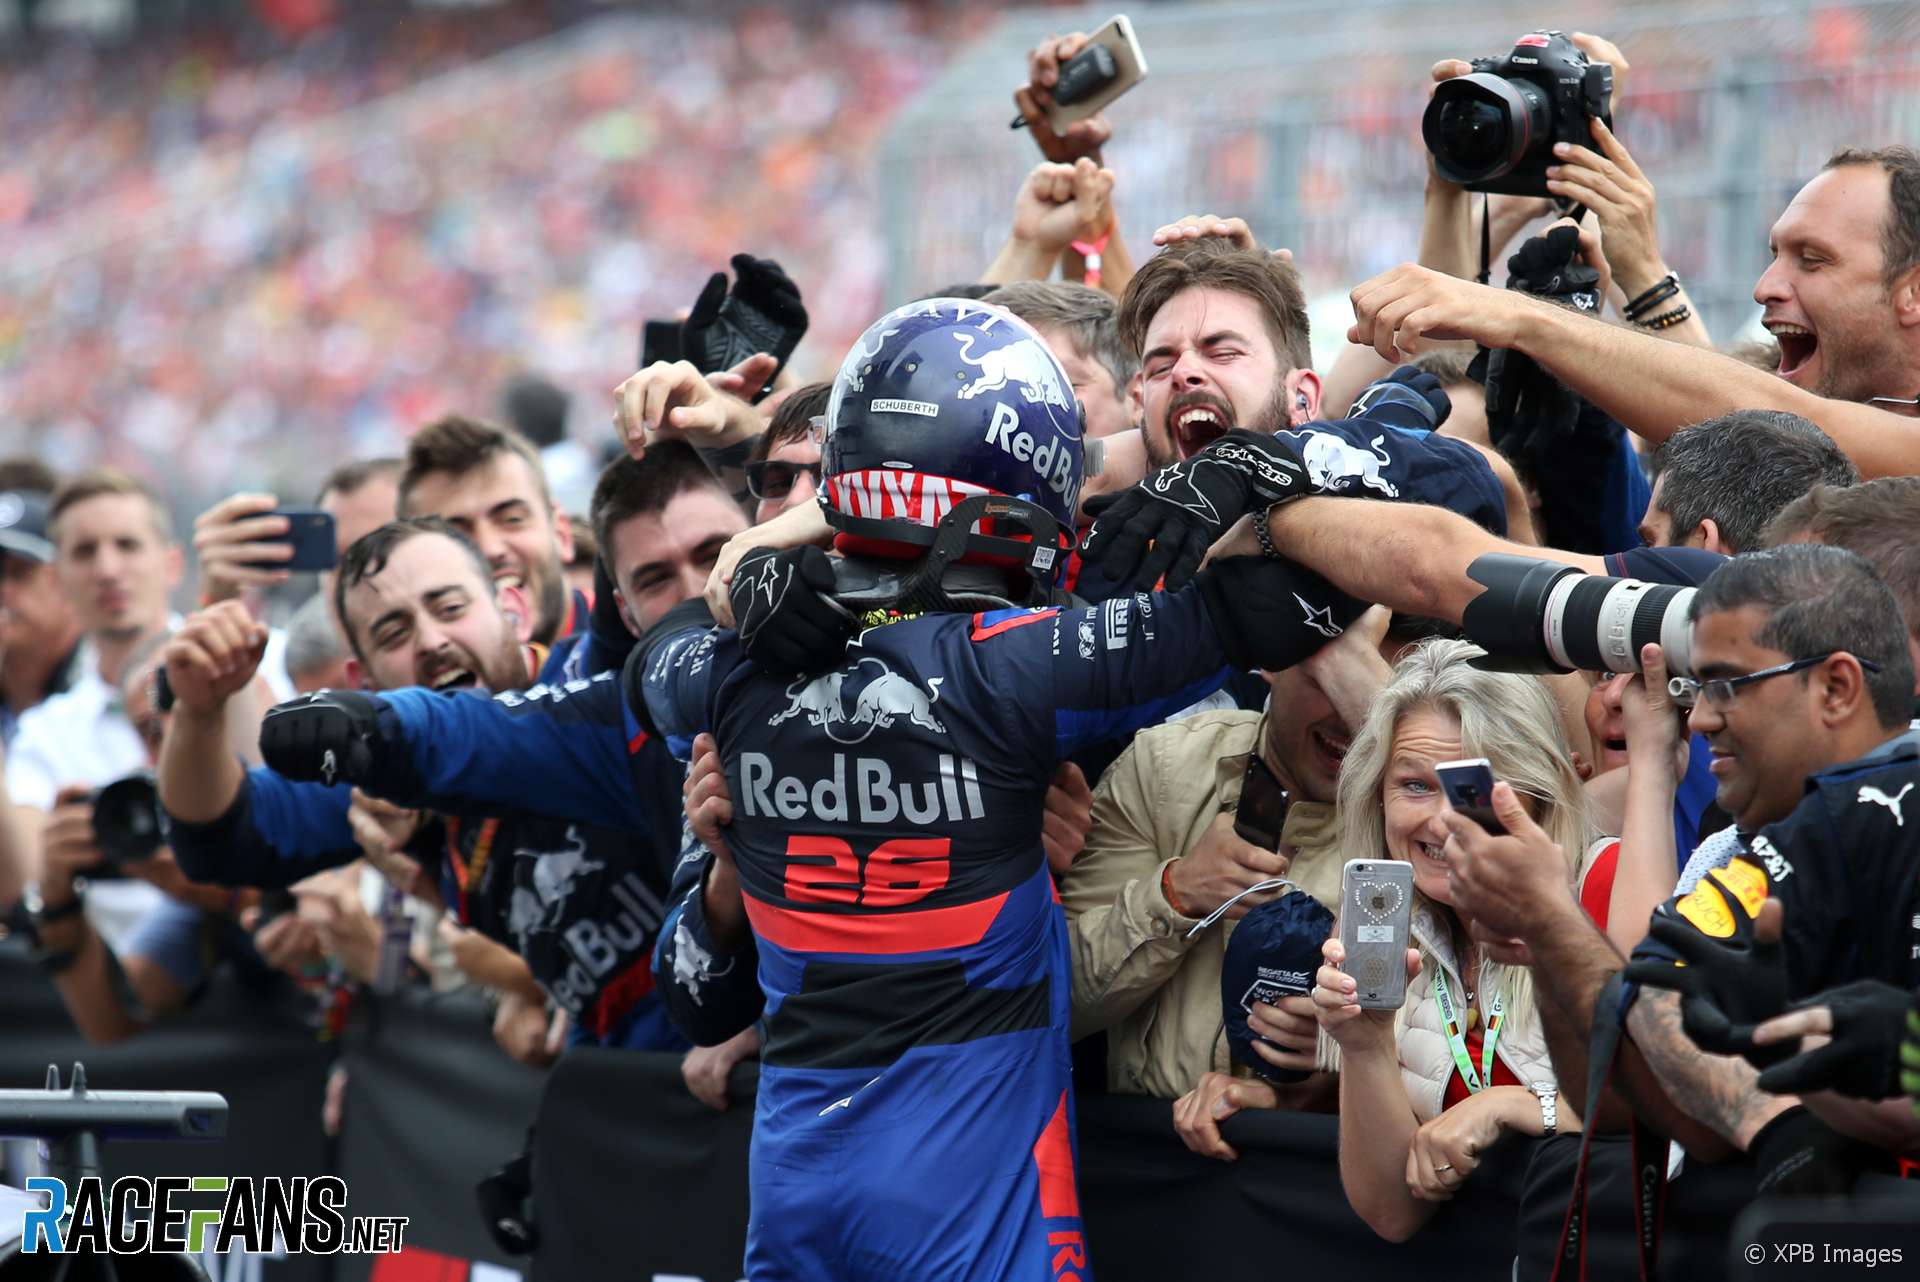 Daniil Kvyat, Toro Rosso, Hockenheimring, 2019